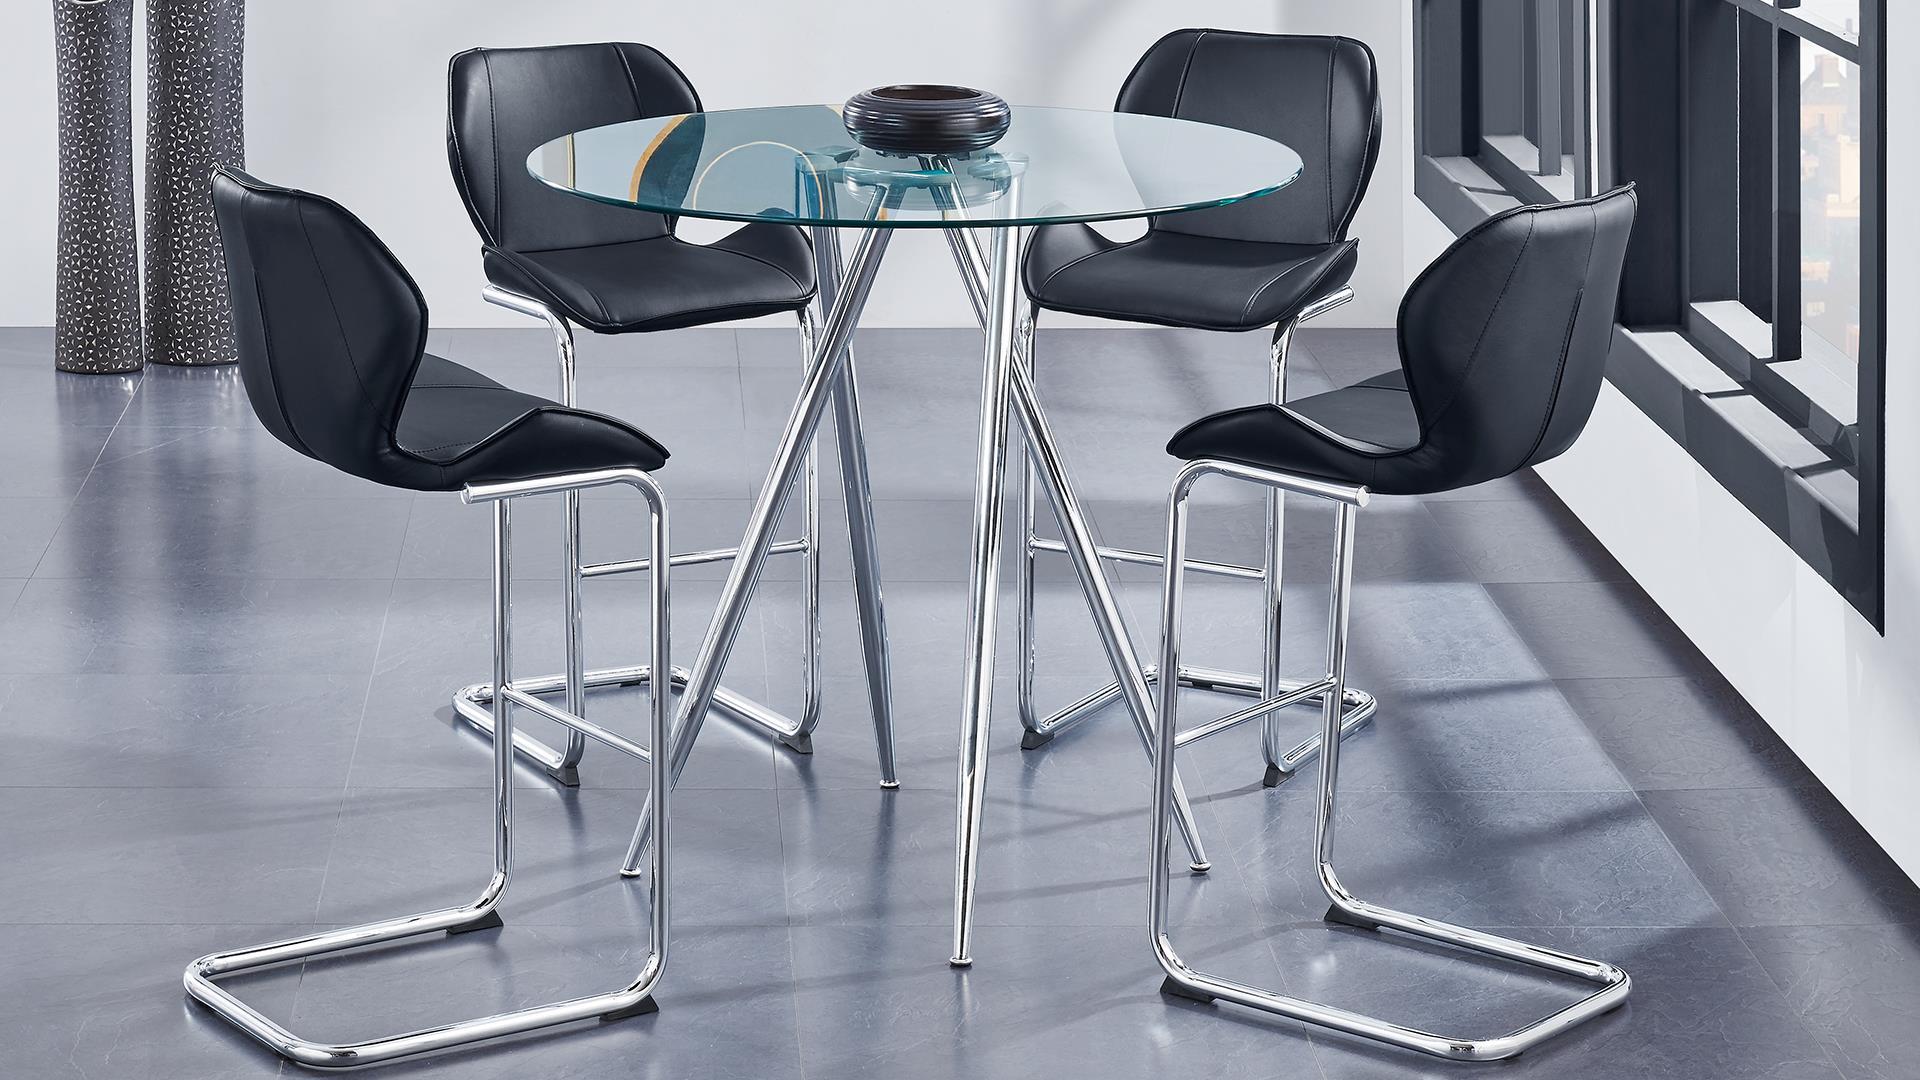 

    
D1503BT Round Glass Top Elegant Bar Table w/ Black PU Chairs Set 5Pcs Global USA
